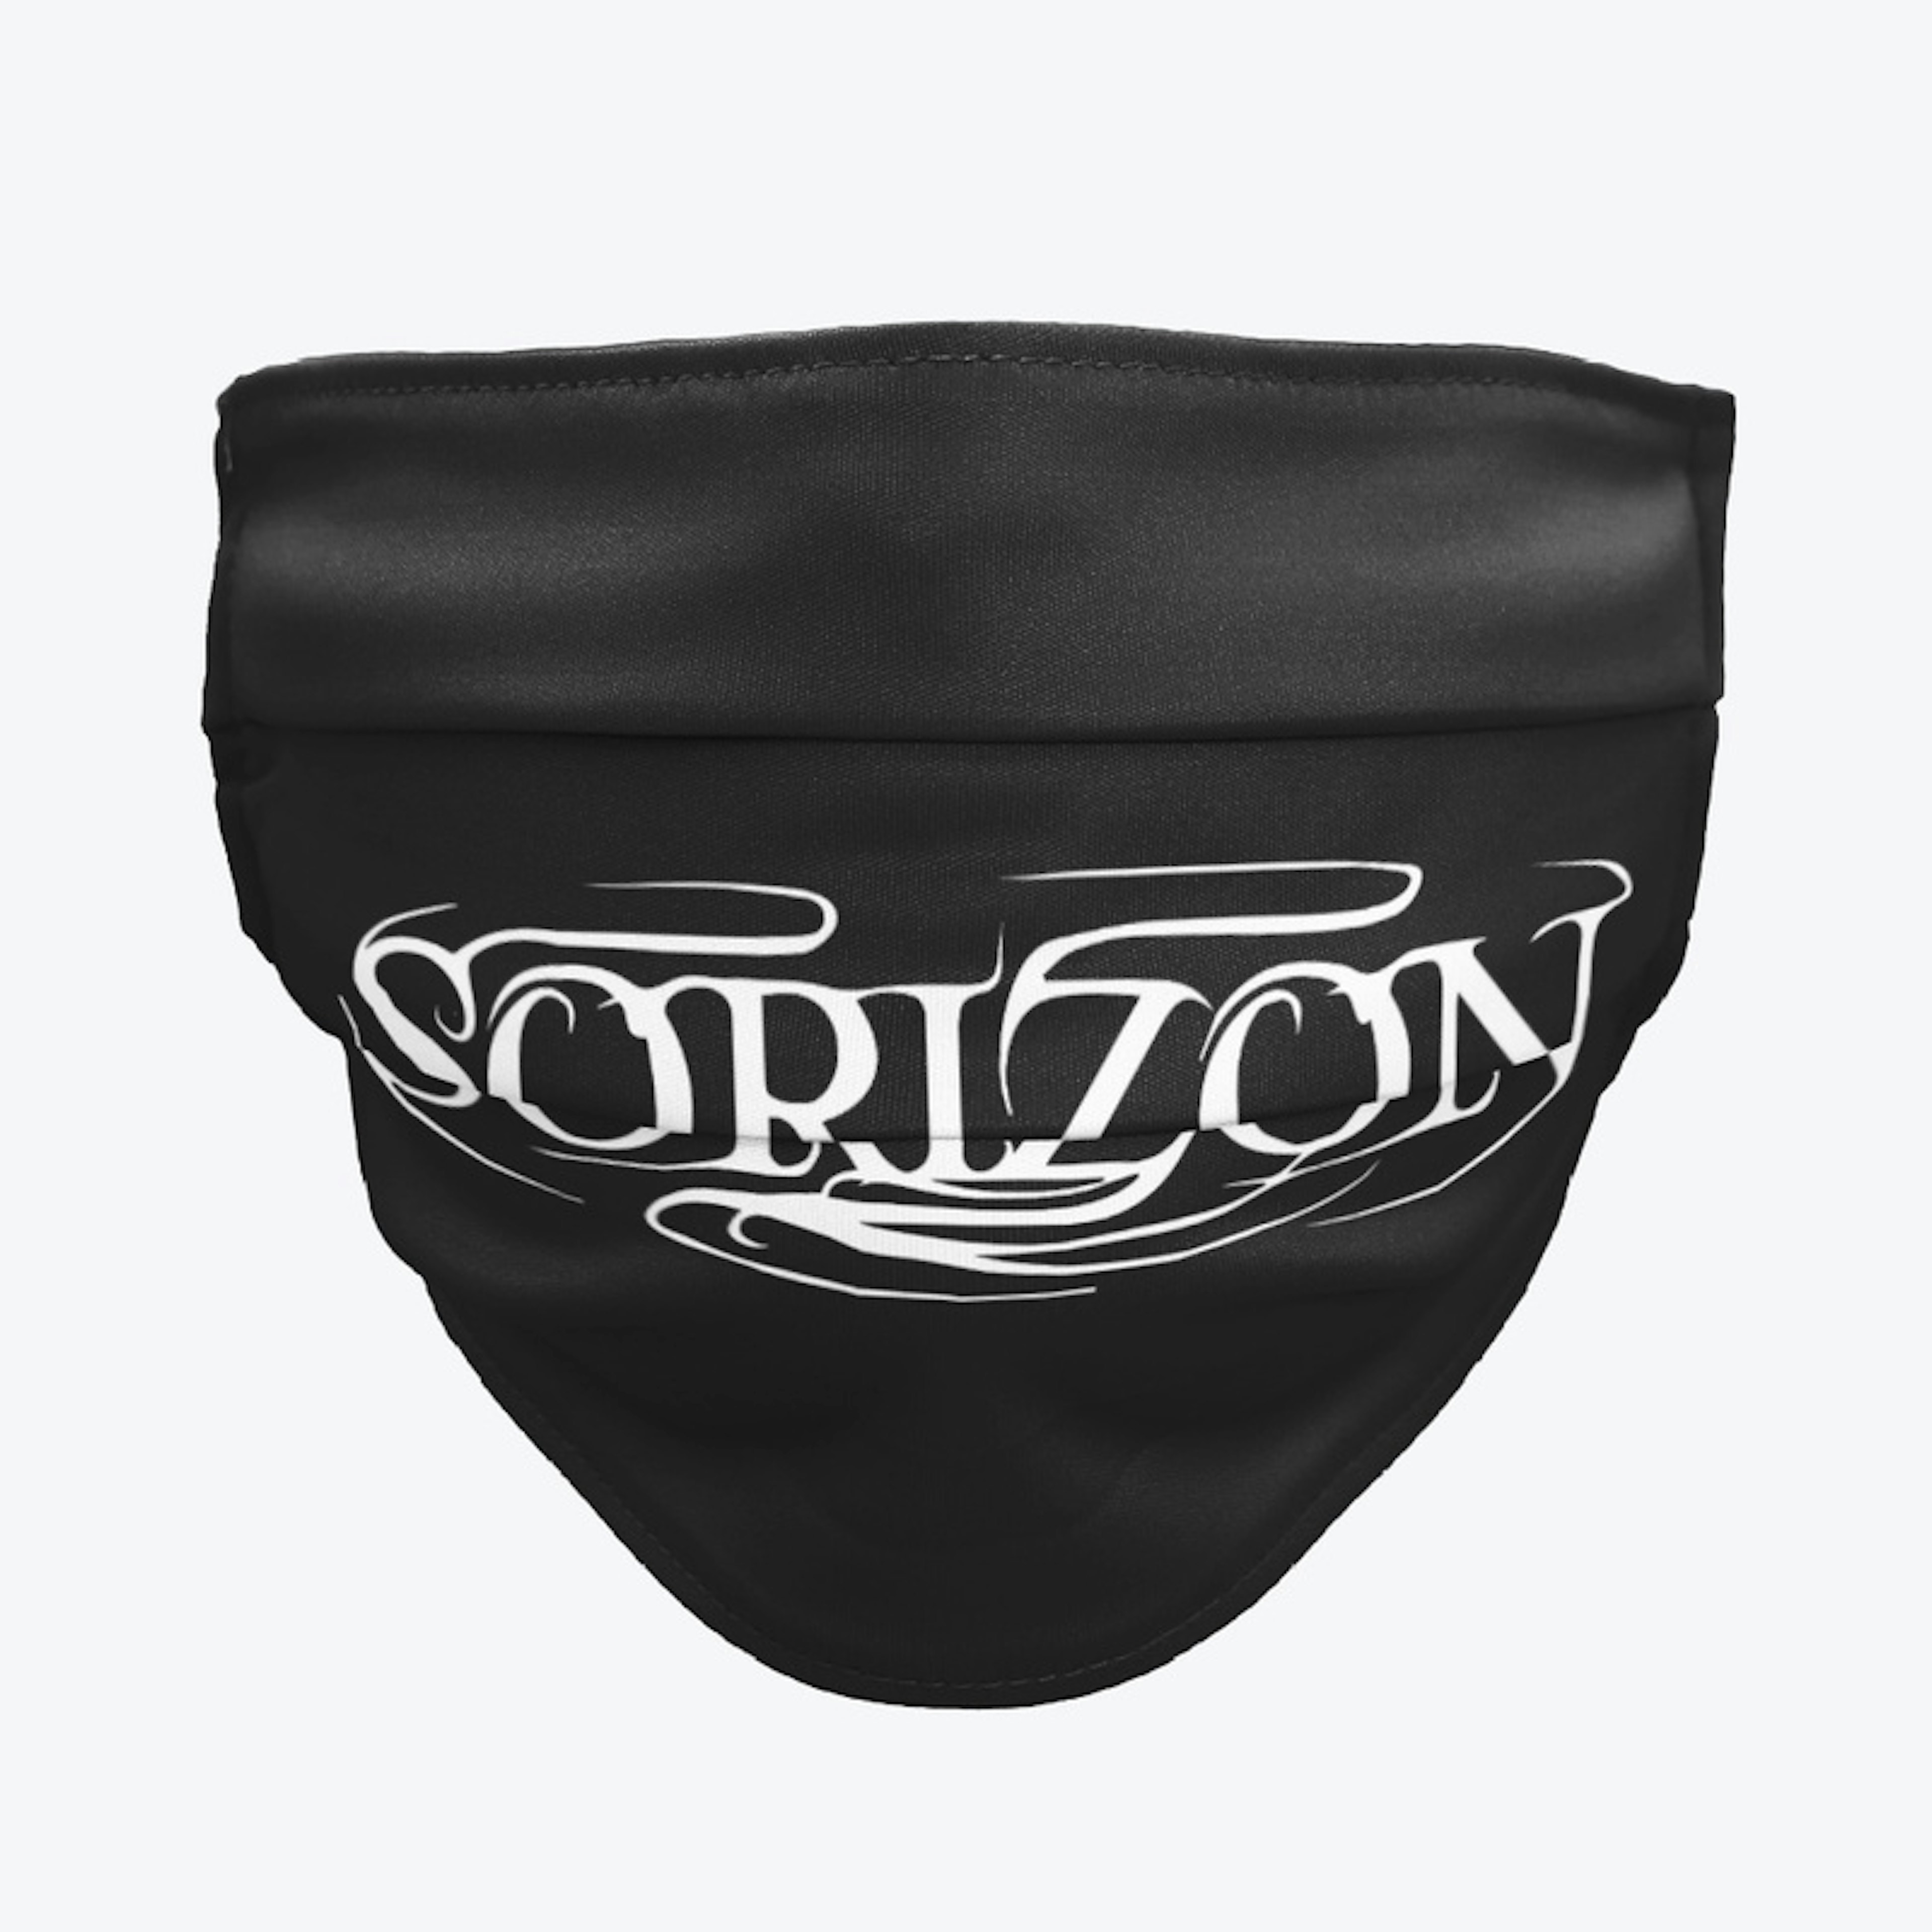 Sorizon Cloth Face Mask